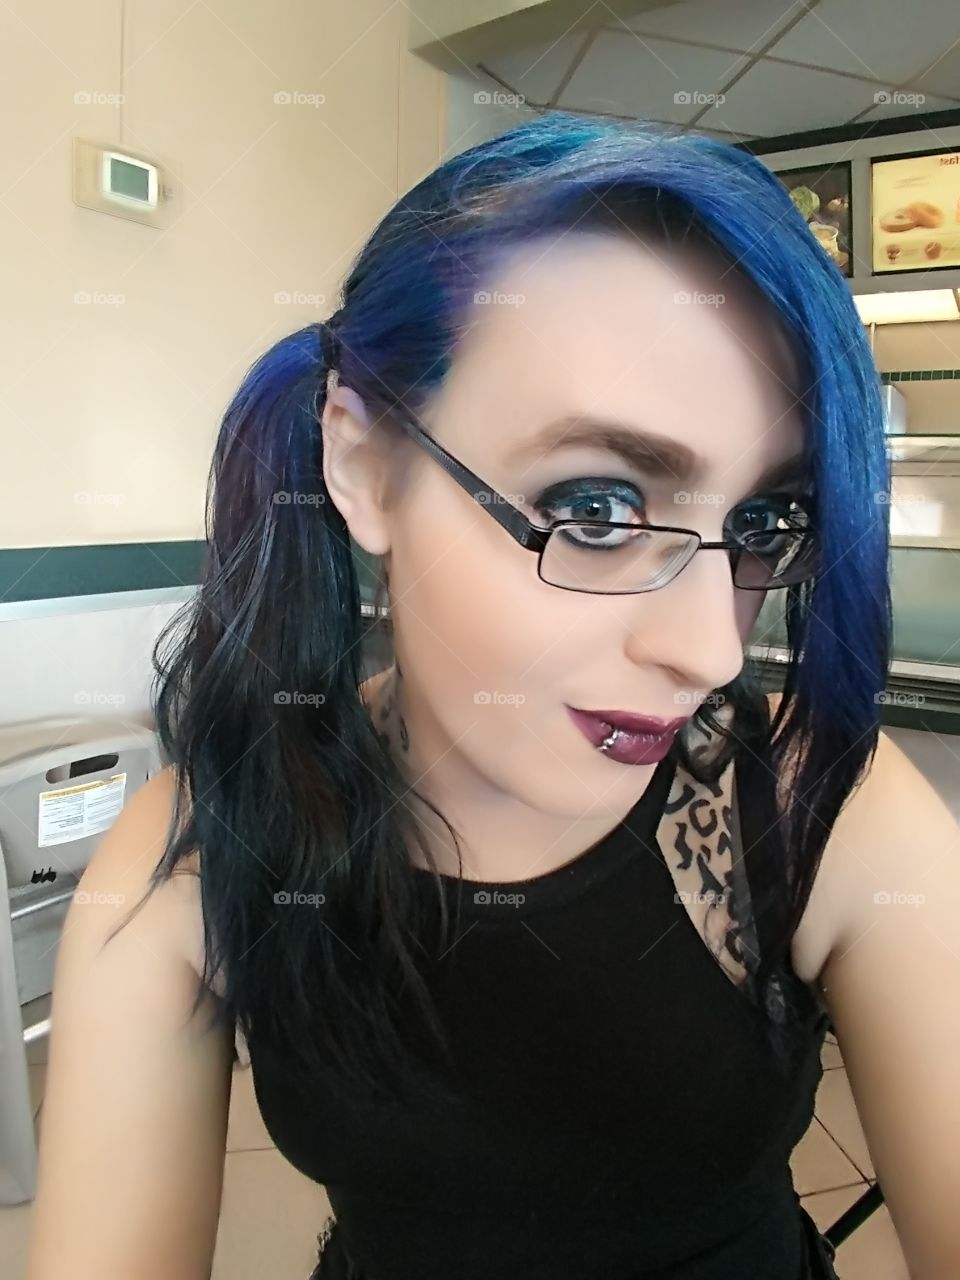 goth girl coloured hair